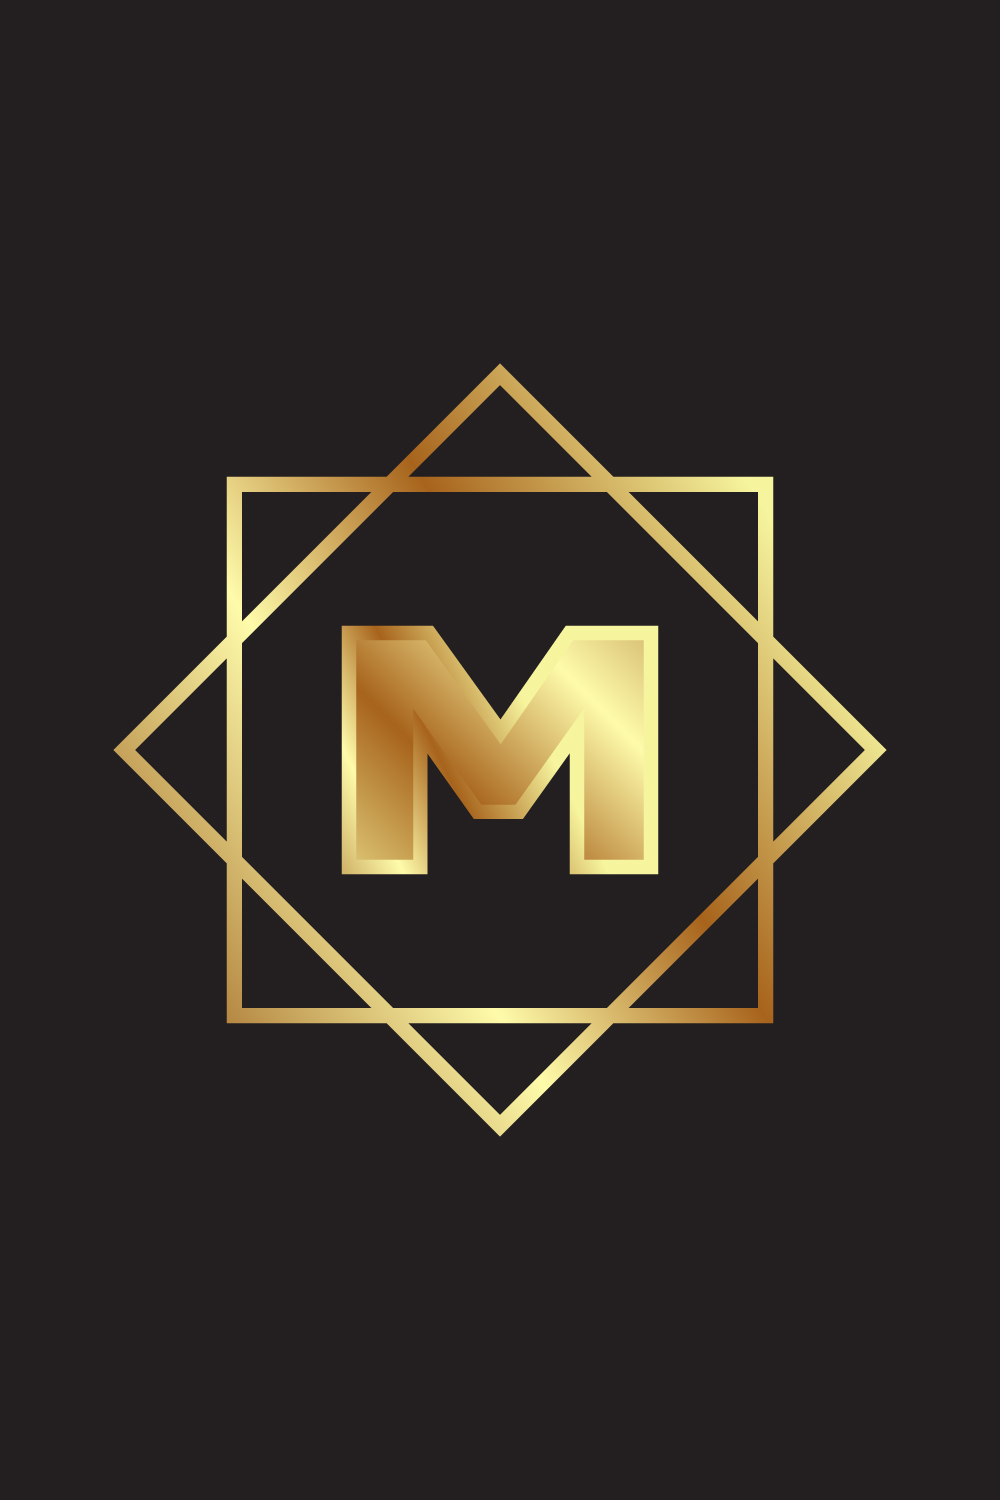 Luxury M letters logo design vector images M logo golden color ang black background logo pinterest preview image.